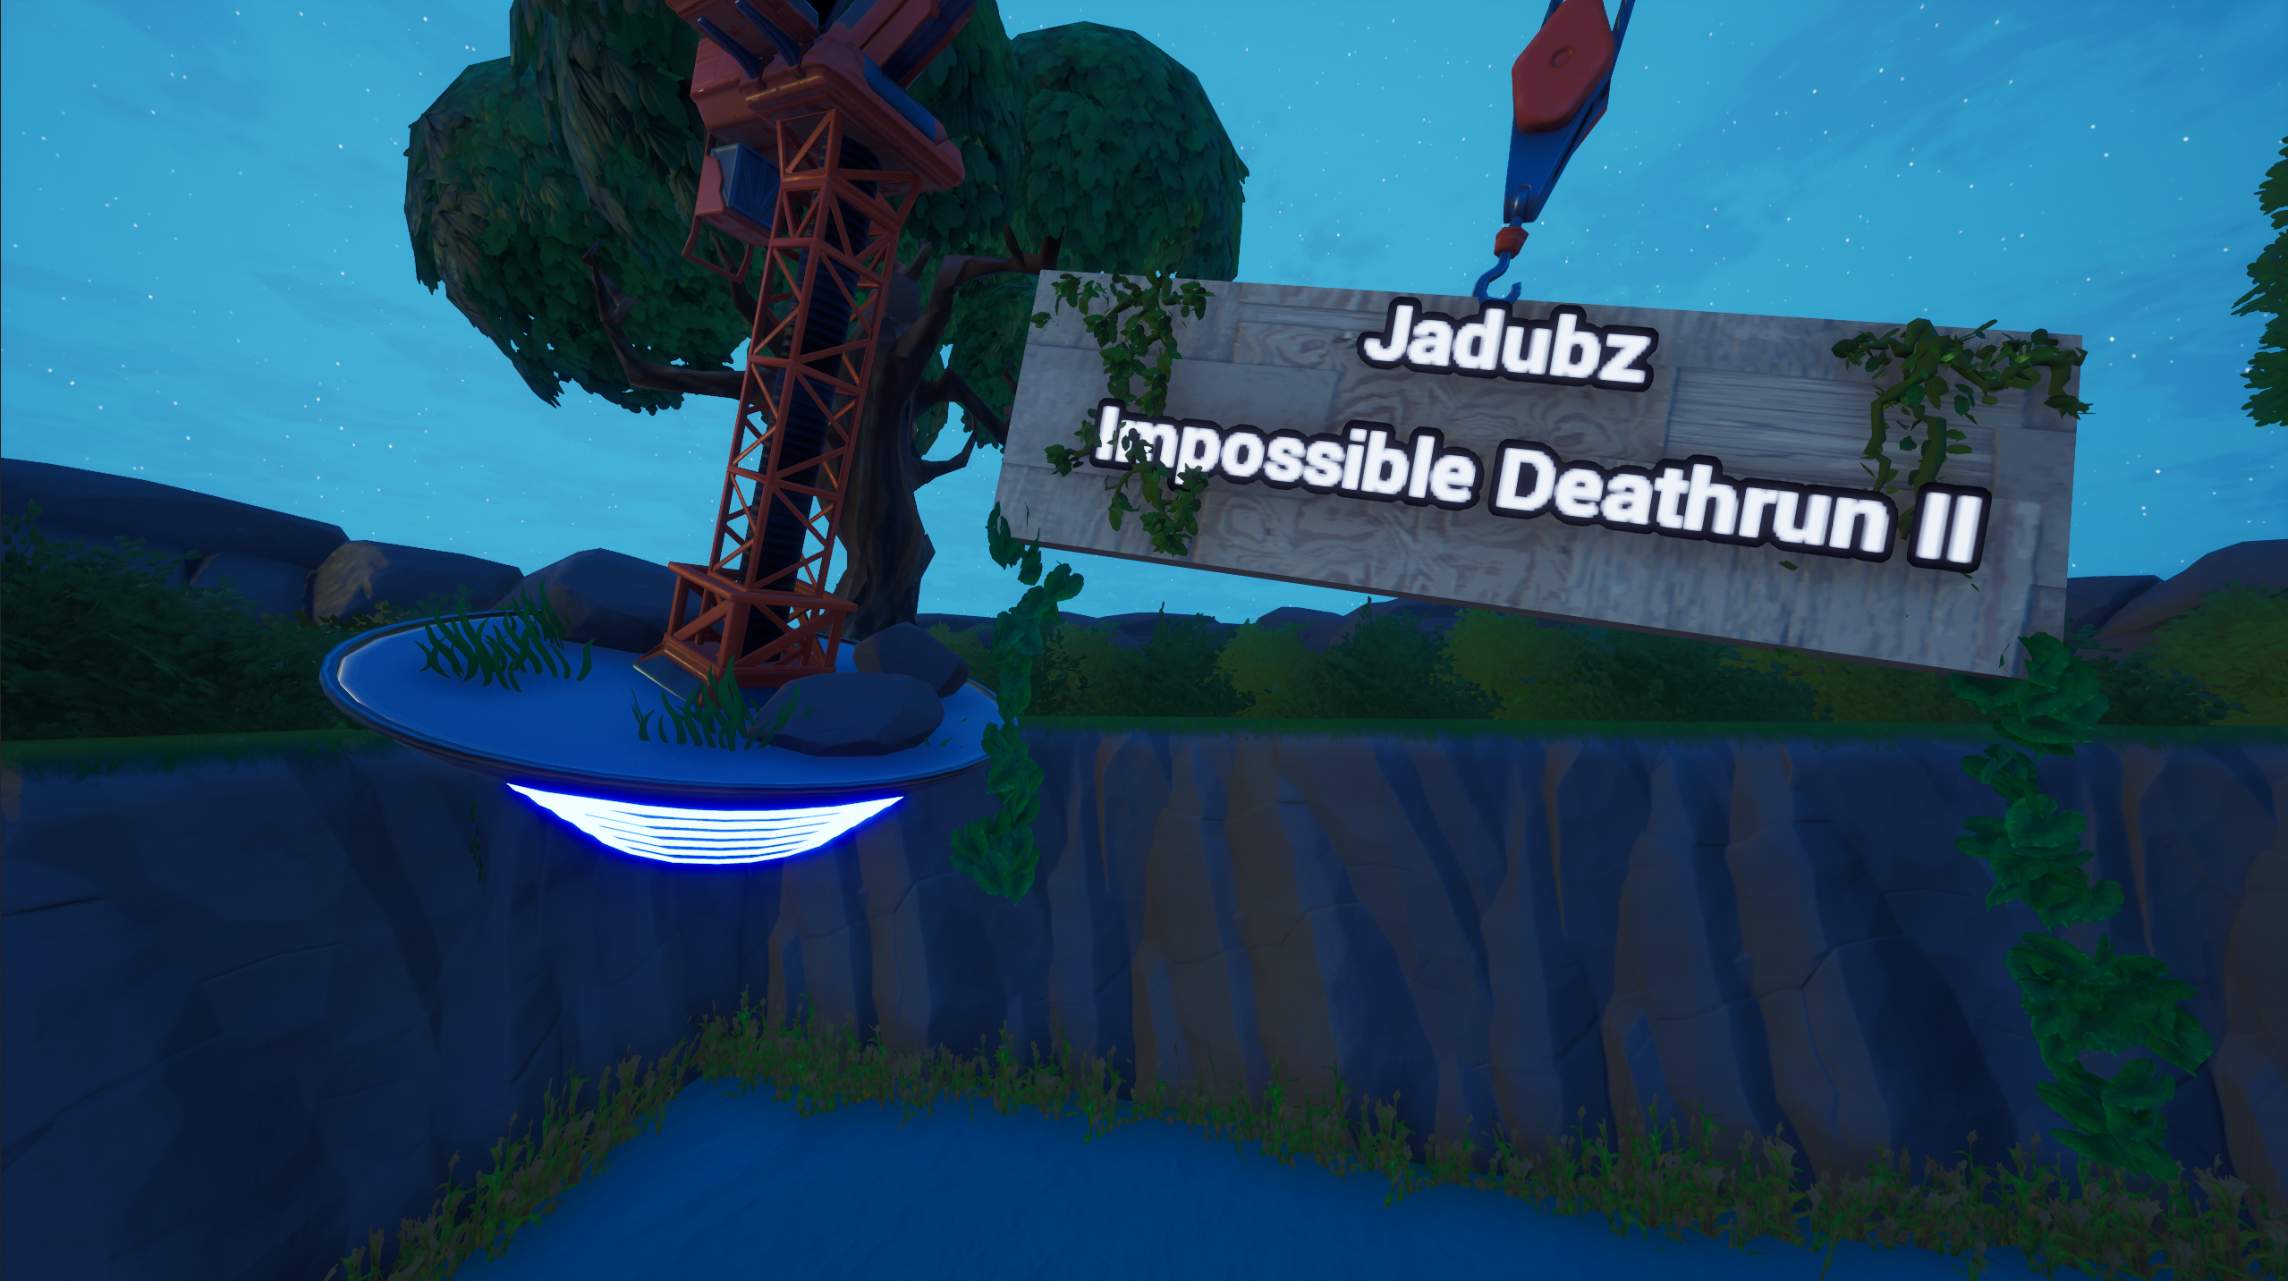 JADUBZ IMPOSSIBLE DEATHRUN II